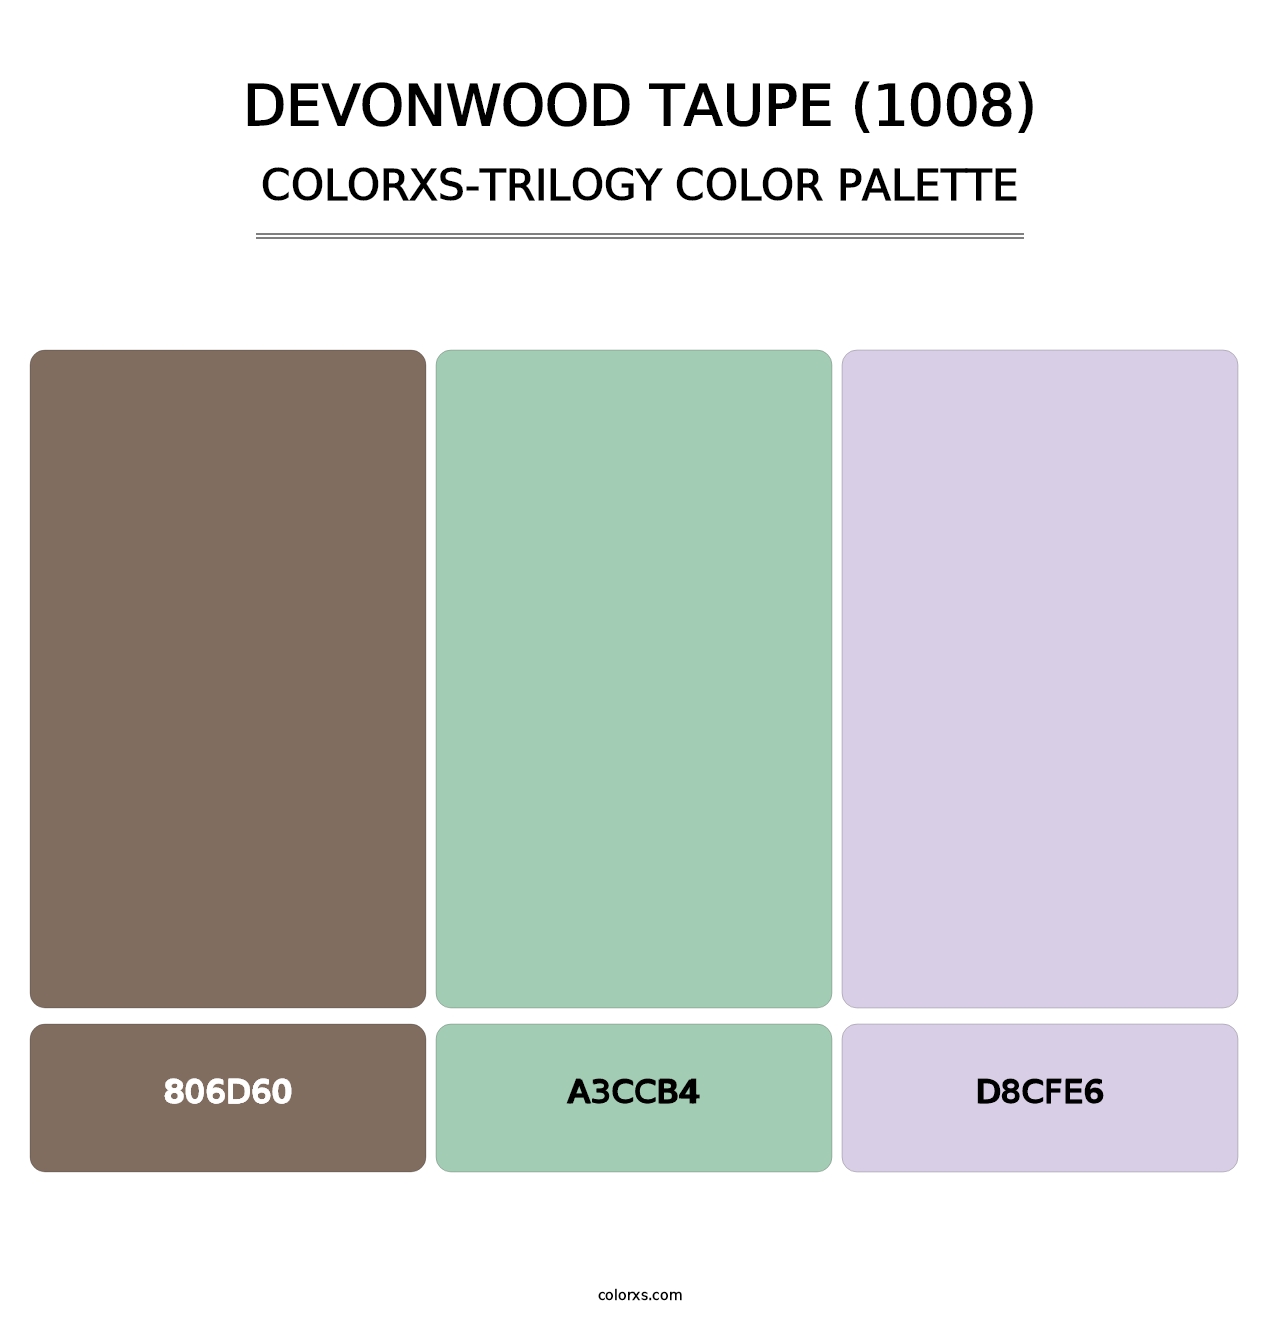 Devonwood Taupe (1008) - Colorxs Trilogy Palette